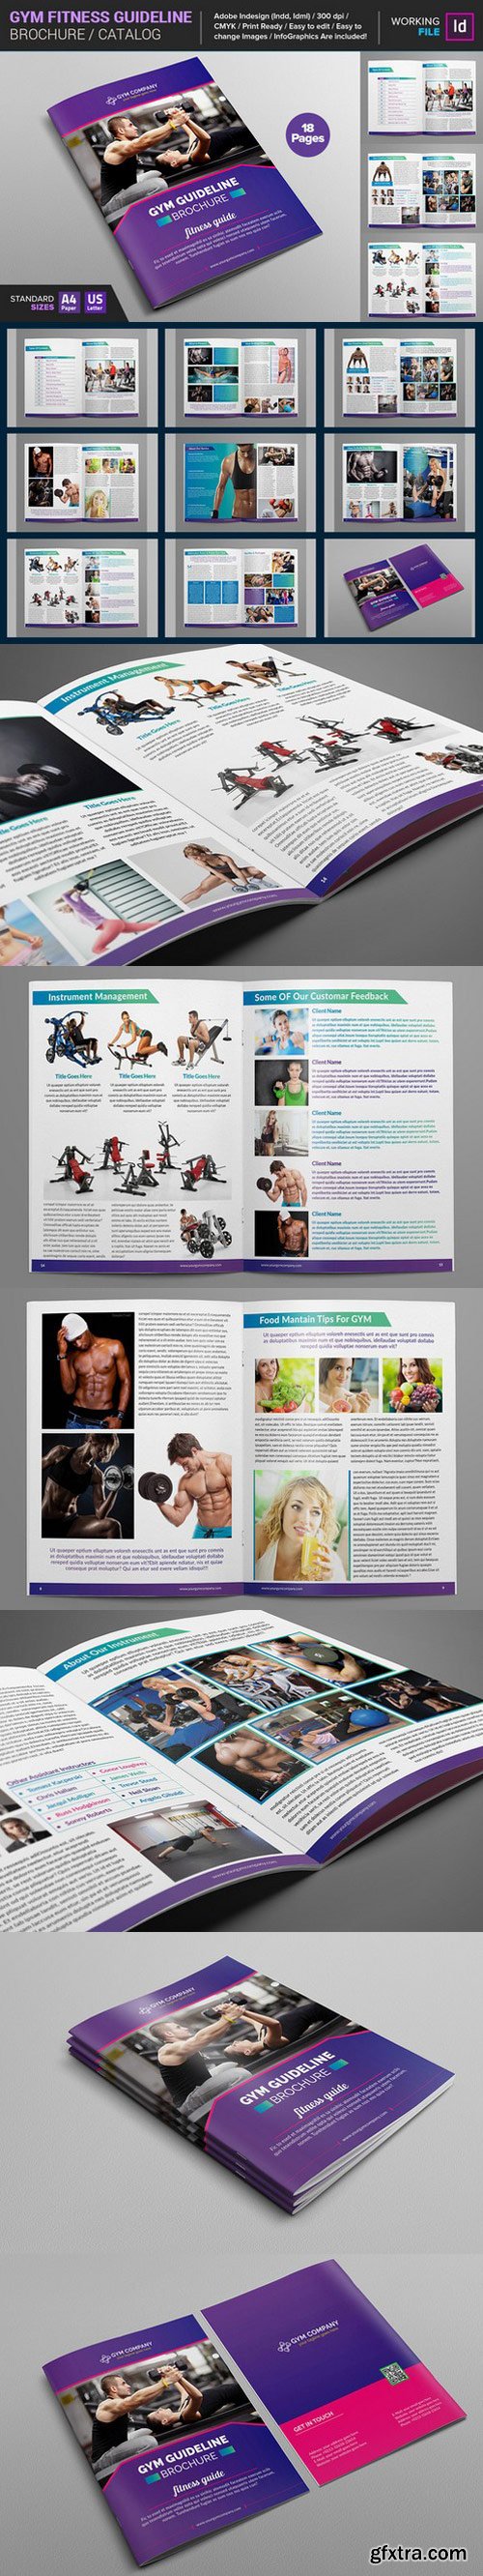 CM - GYM Fitness Guideline Brochure 661851